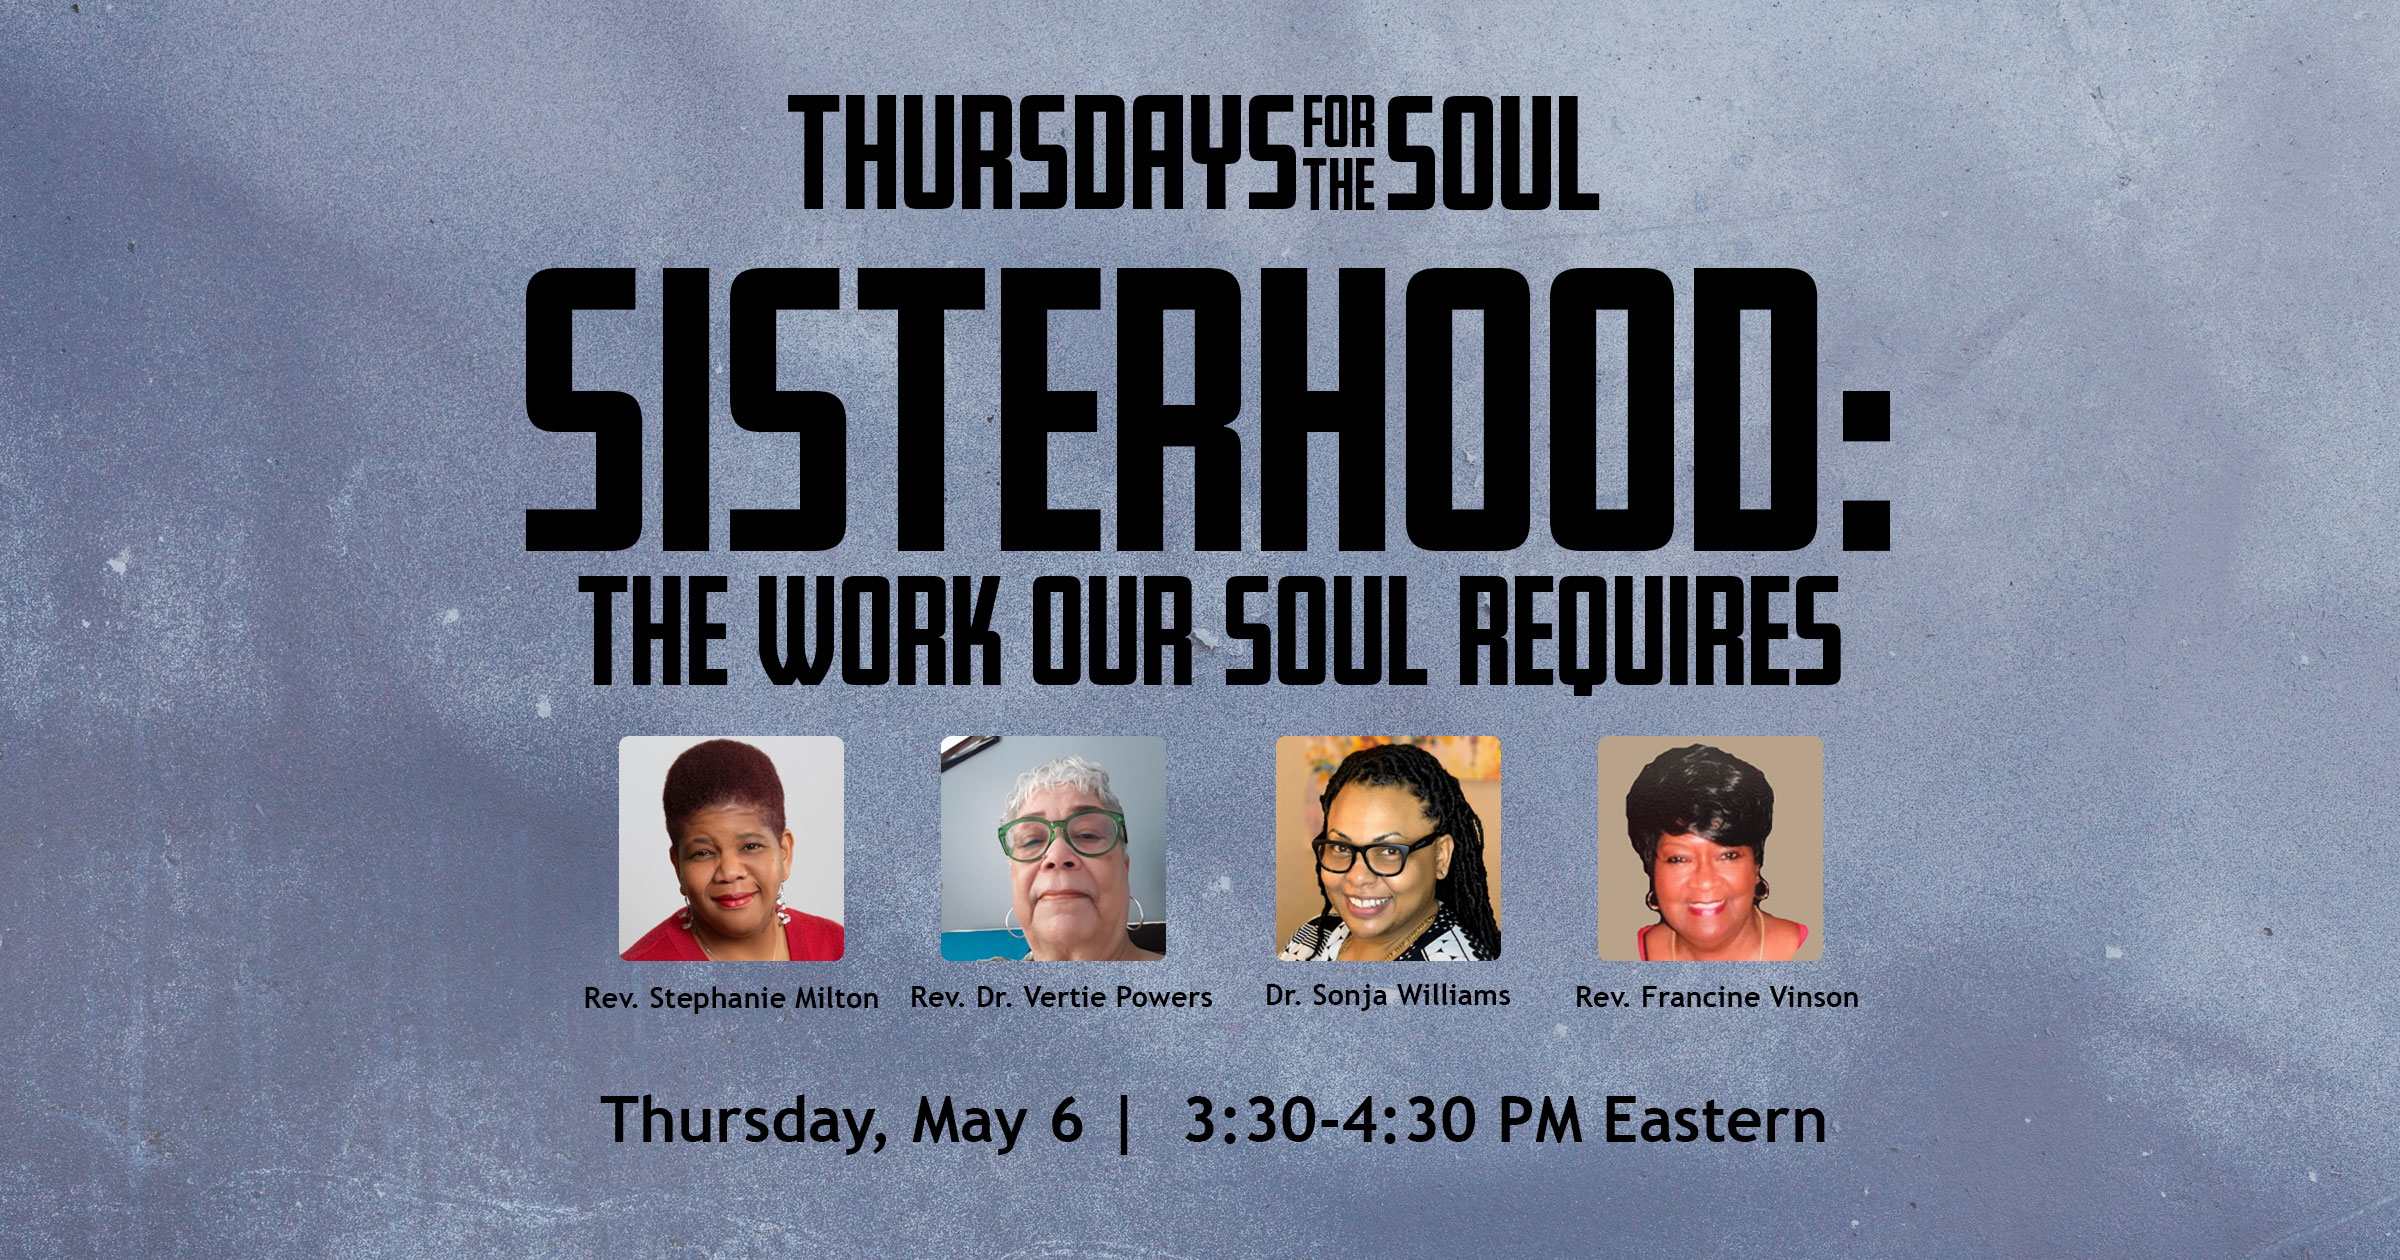 Sisterhood-Thursdays for the Soul-May 3, 2021